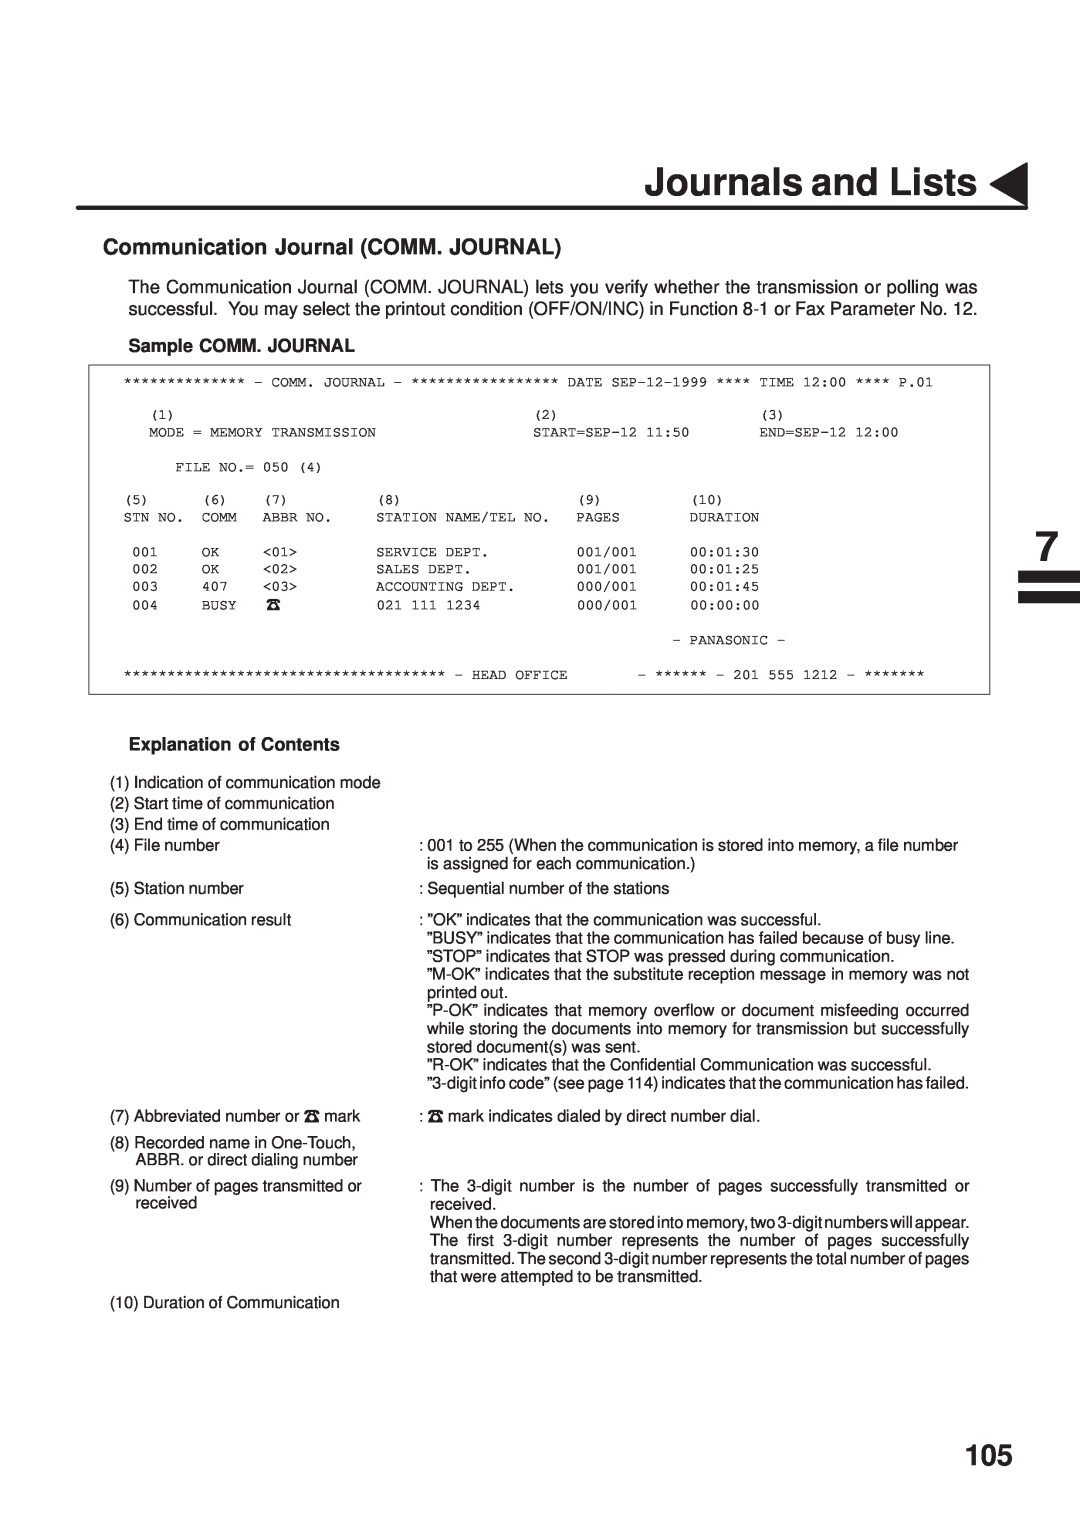 Panasonic UF-333 manual Journals and Lists, Communication Journal COMM. JOURNAL 